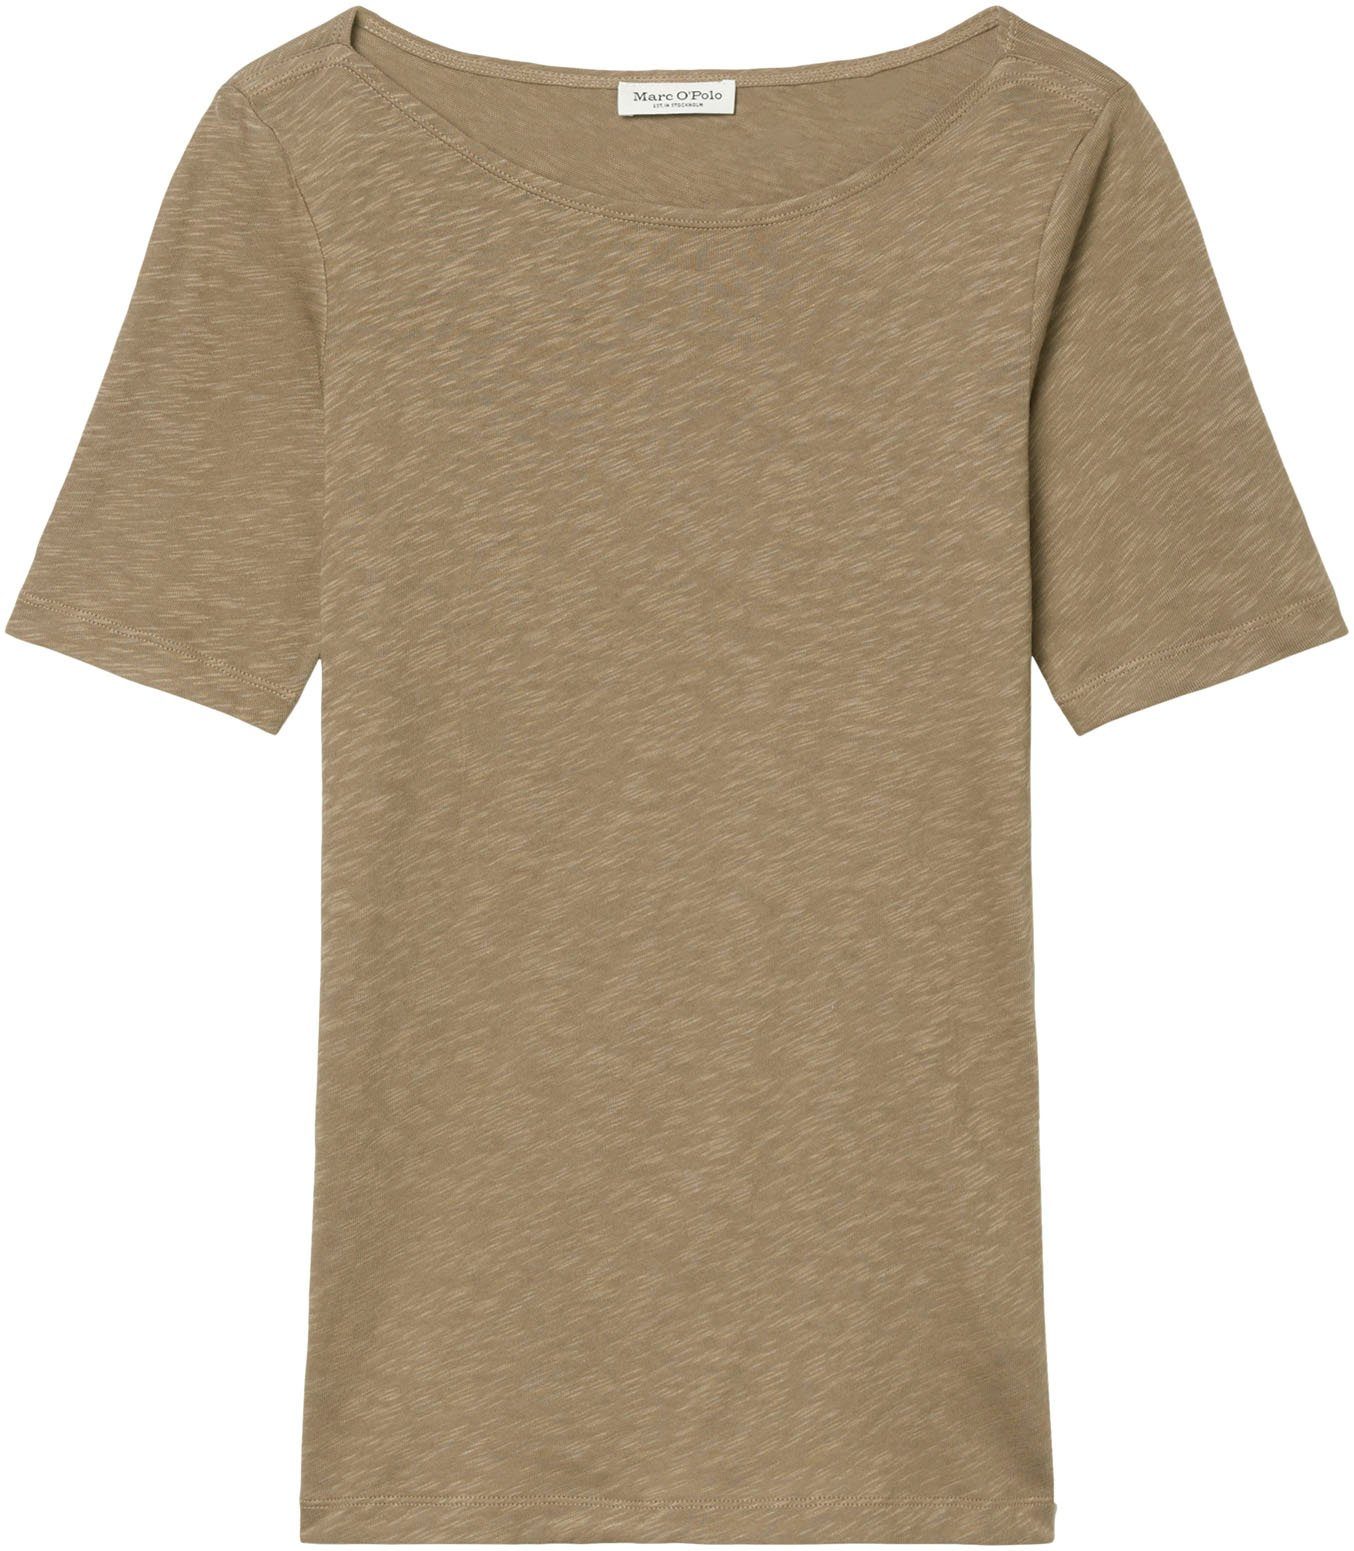 dusty O'Polo earth T-Shirt Marc